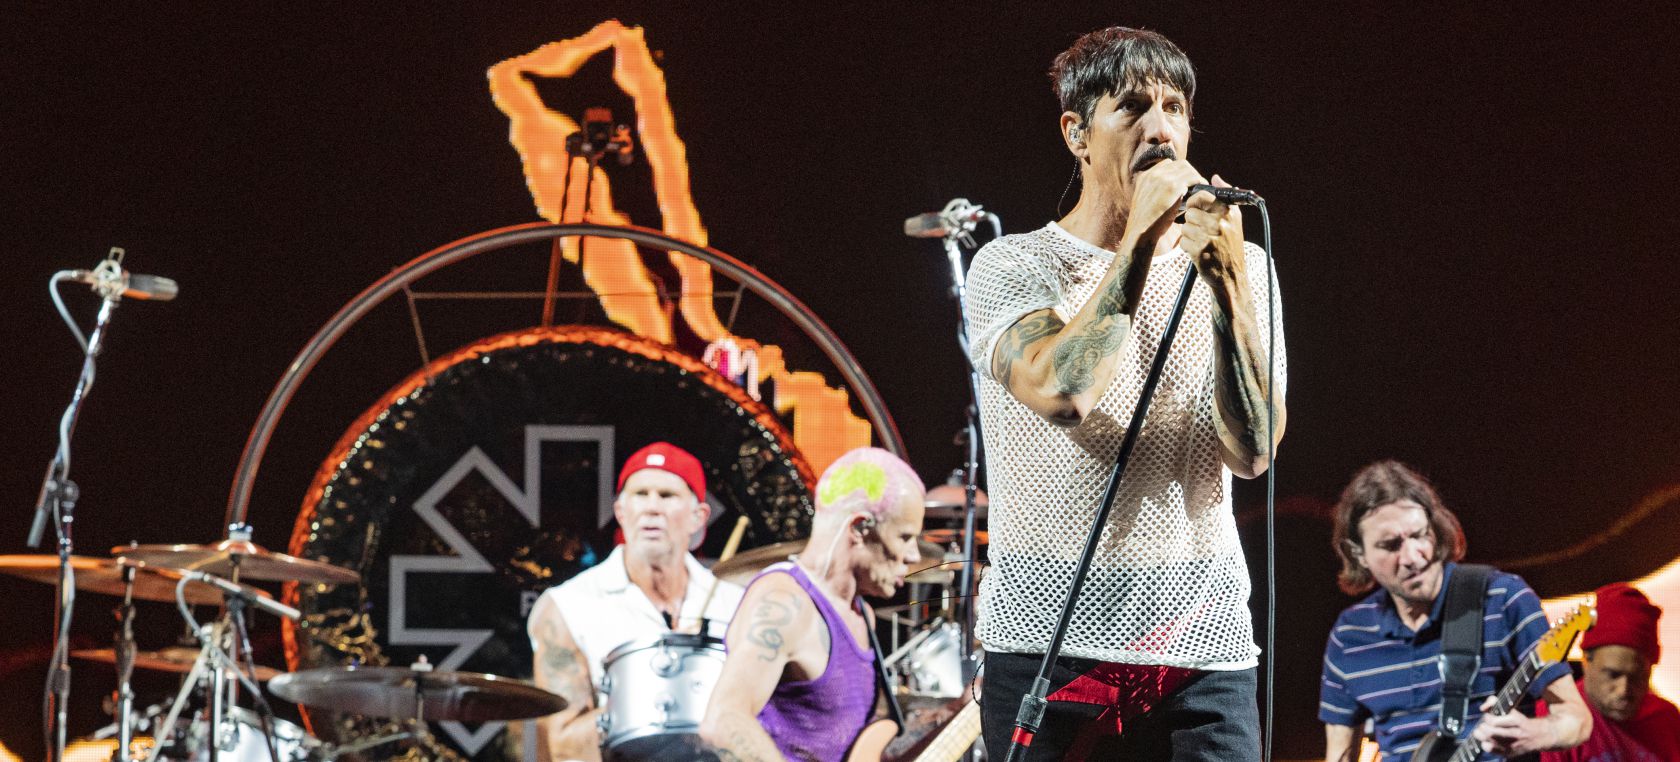 Red Hot Chili Peppers versionan en directo ‘Smells Like Teen Spirit' de Nirvana